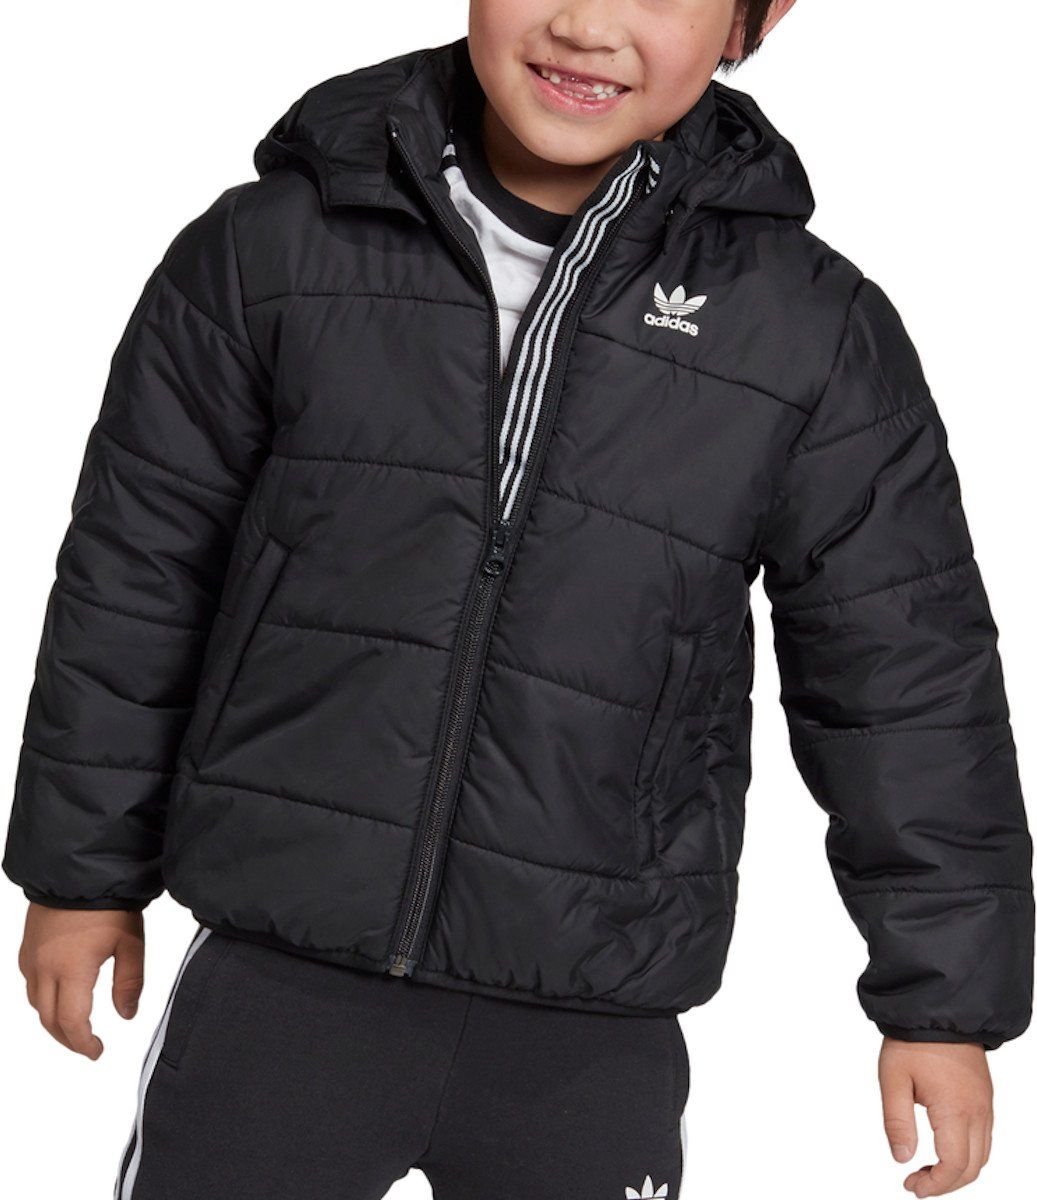 Bunda s kapucí adidas Originals WINTER JKT kids ed7735 Velikost 122 - obrázek 1